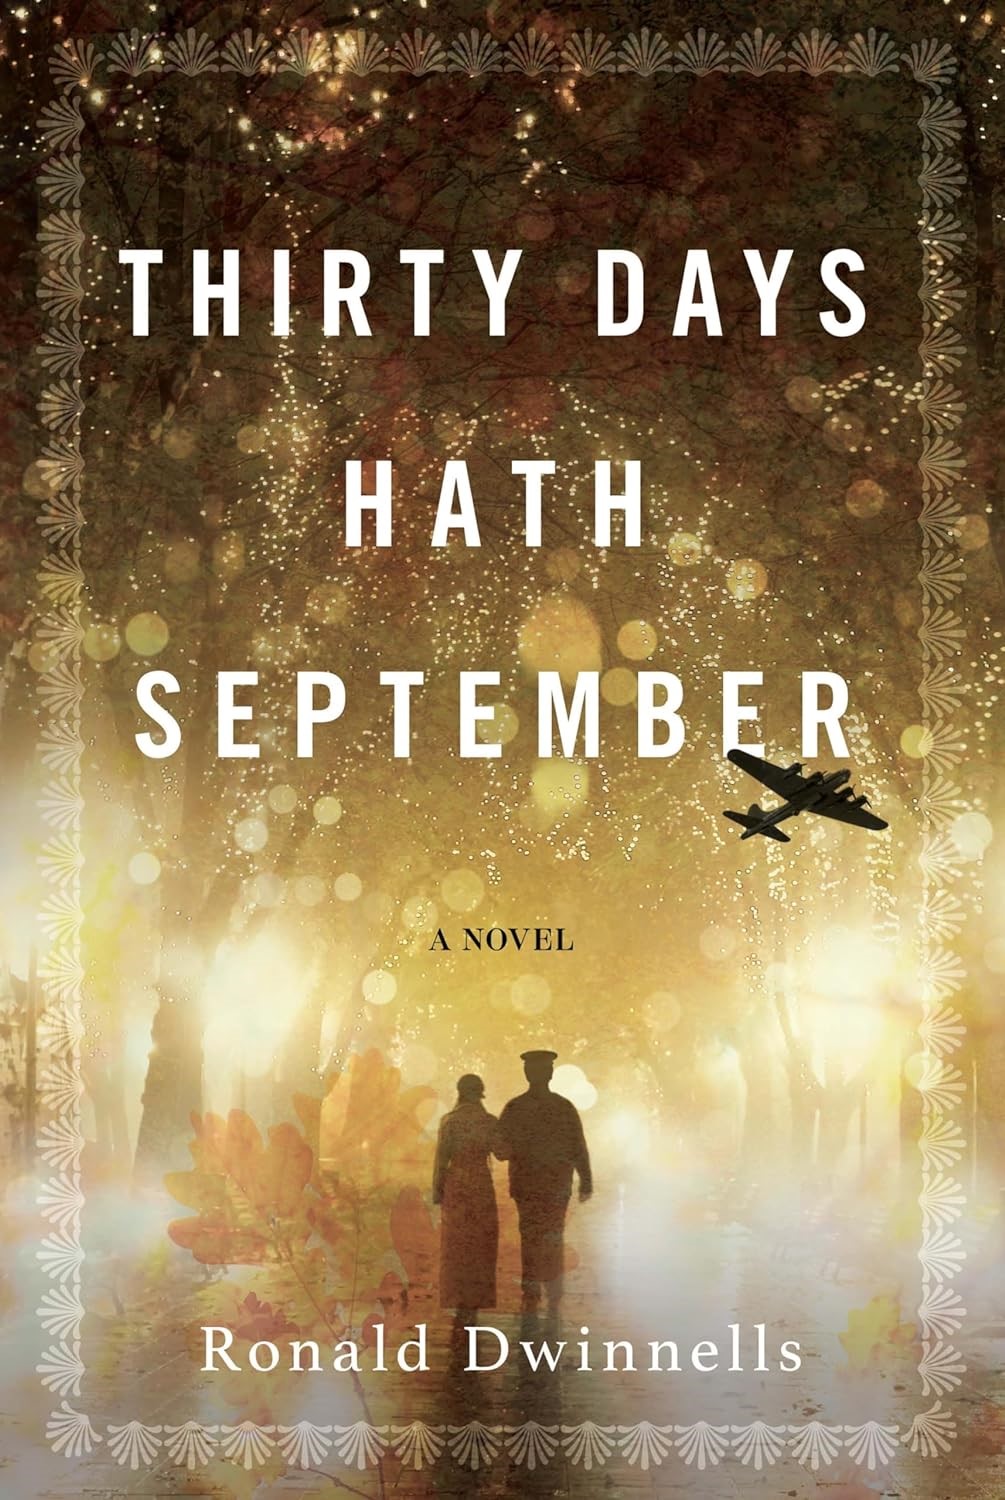 Timeless Romance Meets Medical Drama in Award-Winning "Thirty Days Hath September" by Ronald Dwinnells